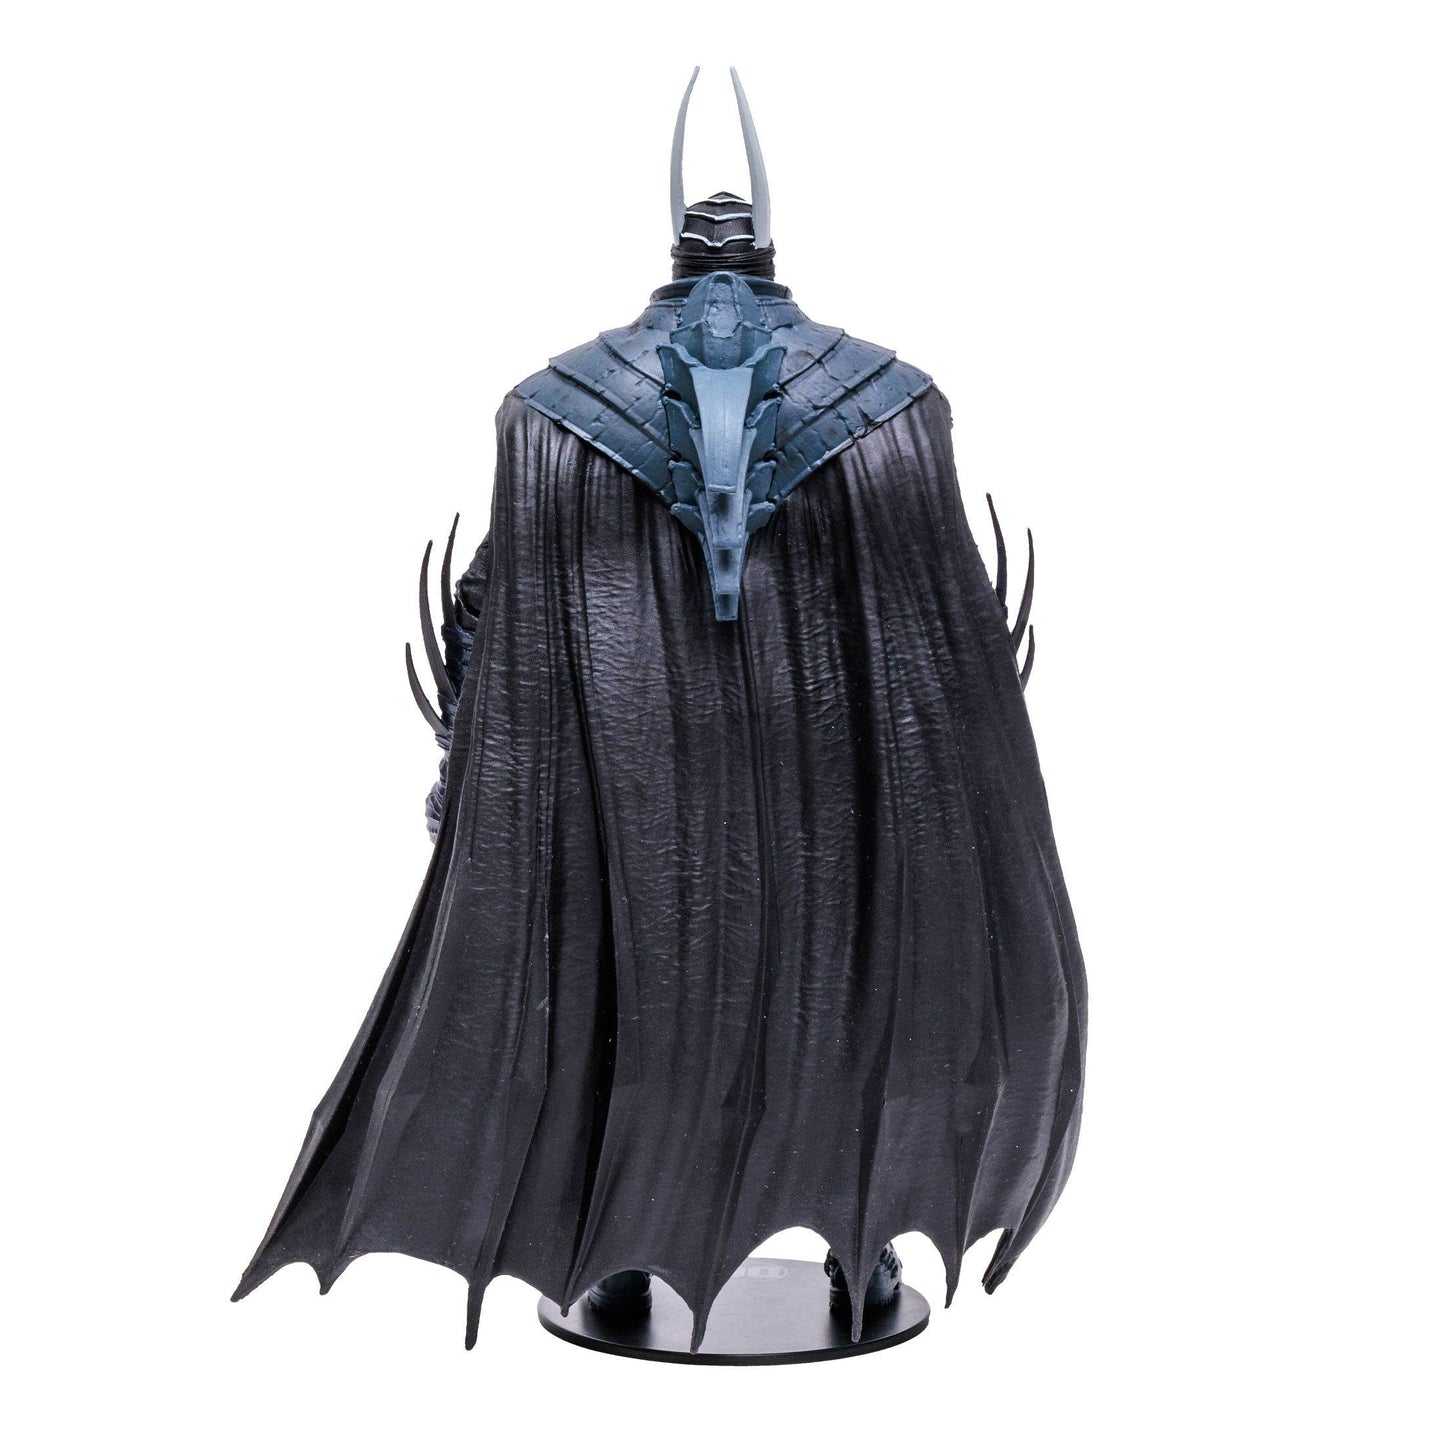 Batman Duke Thomas - Articulated figurine